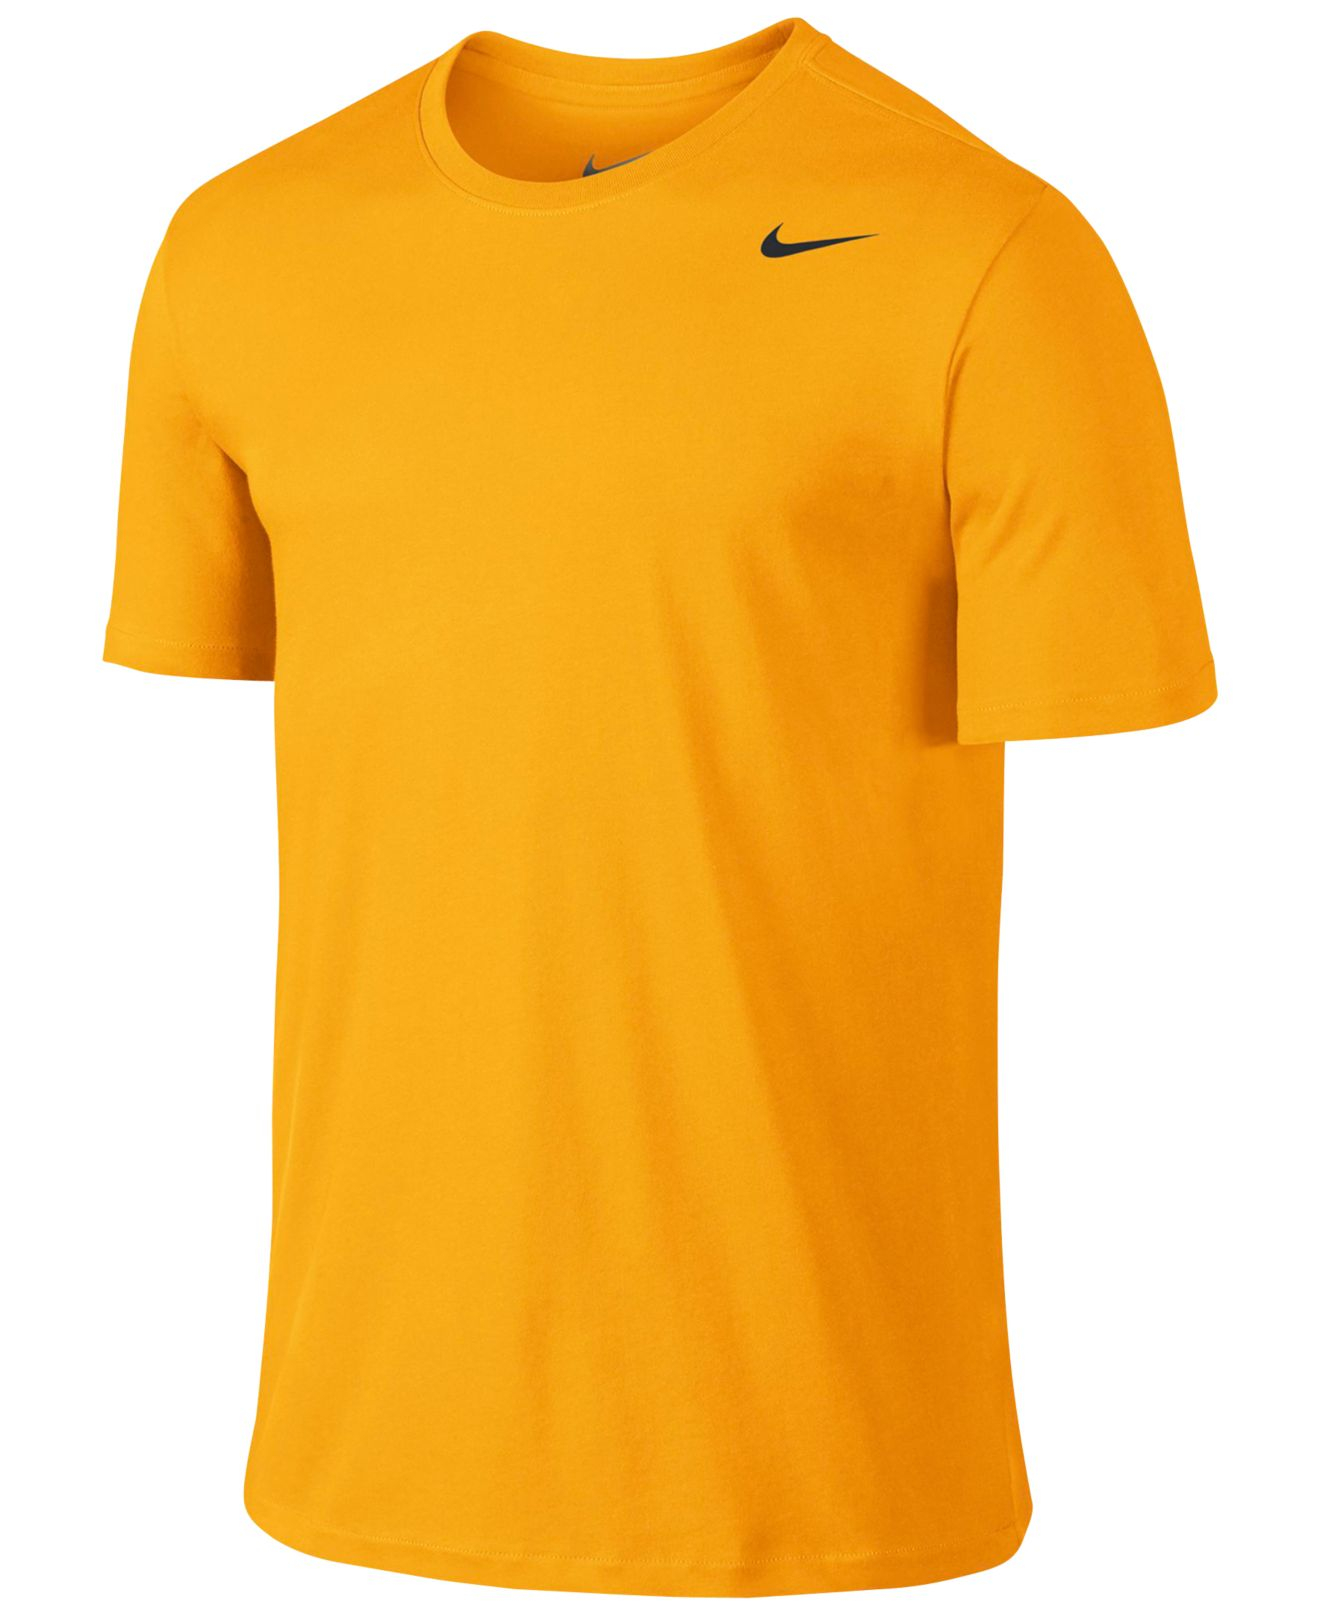 yellow nike dri fit shirt